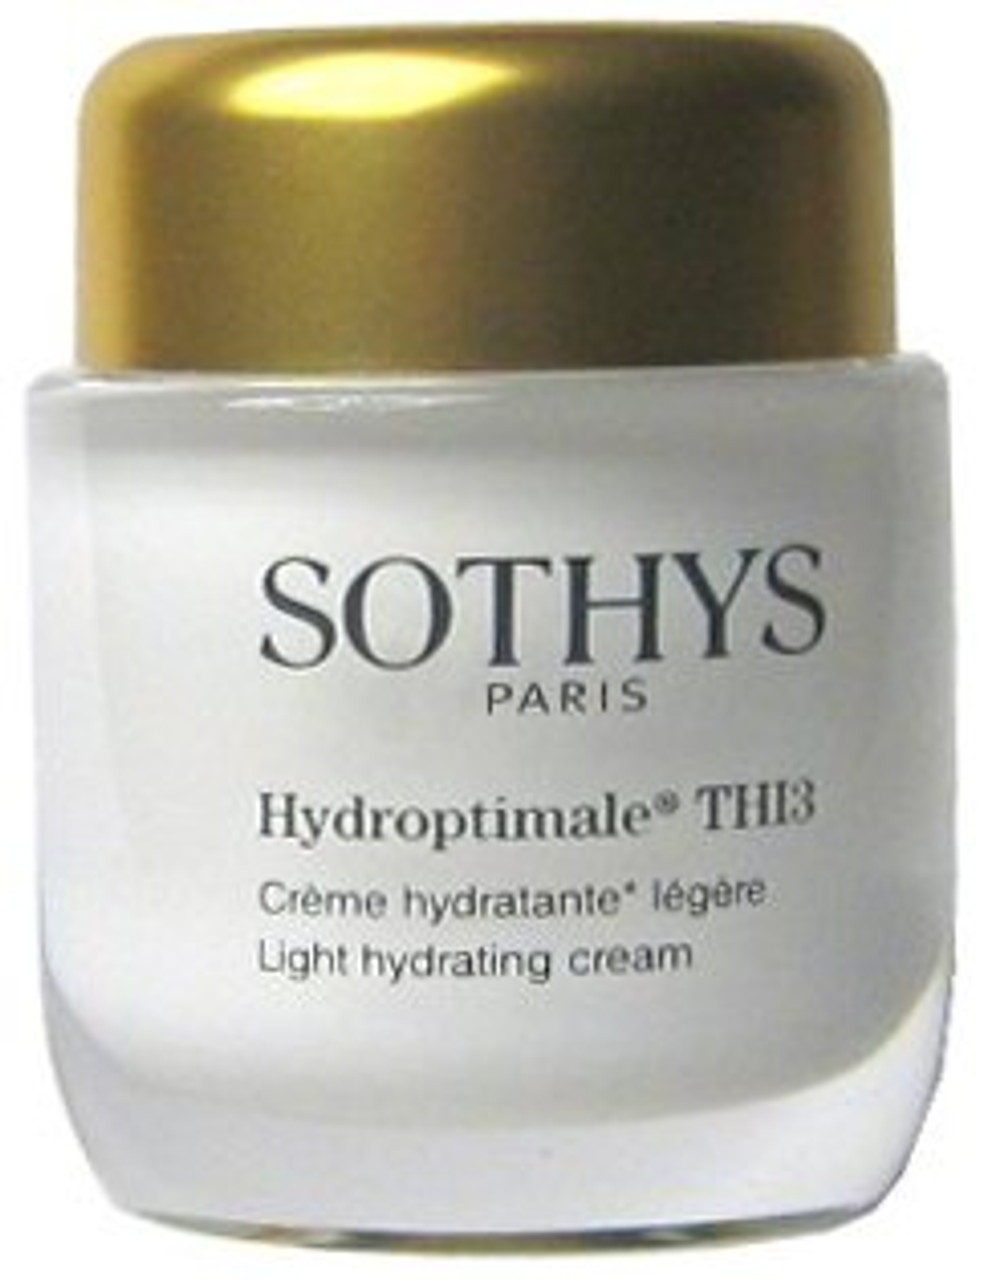 Sothys Hydroptimale THI3 Light  Cream (Normal/Oily Skin Moisturizer) 1.7 oz